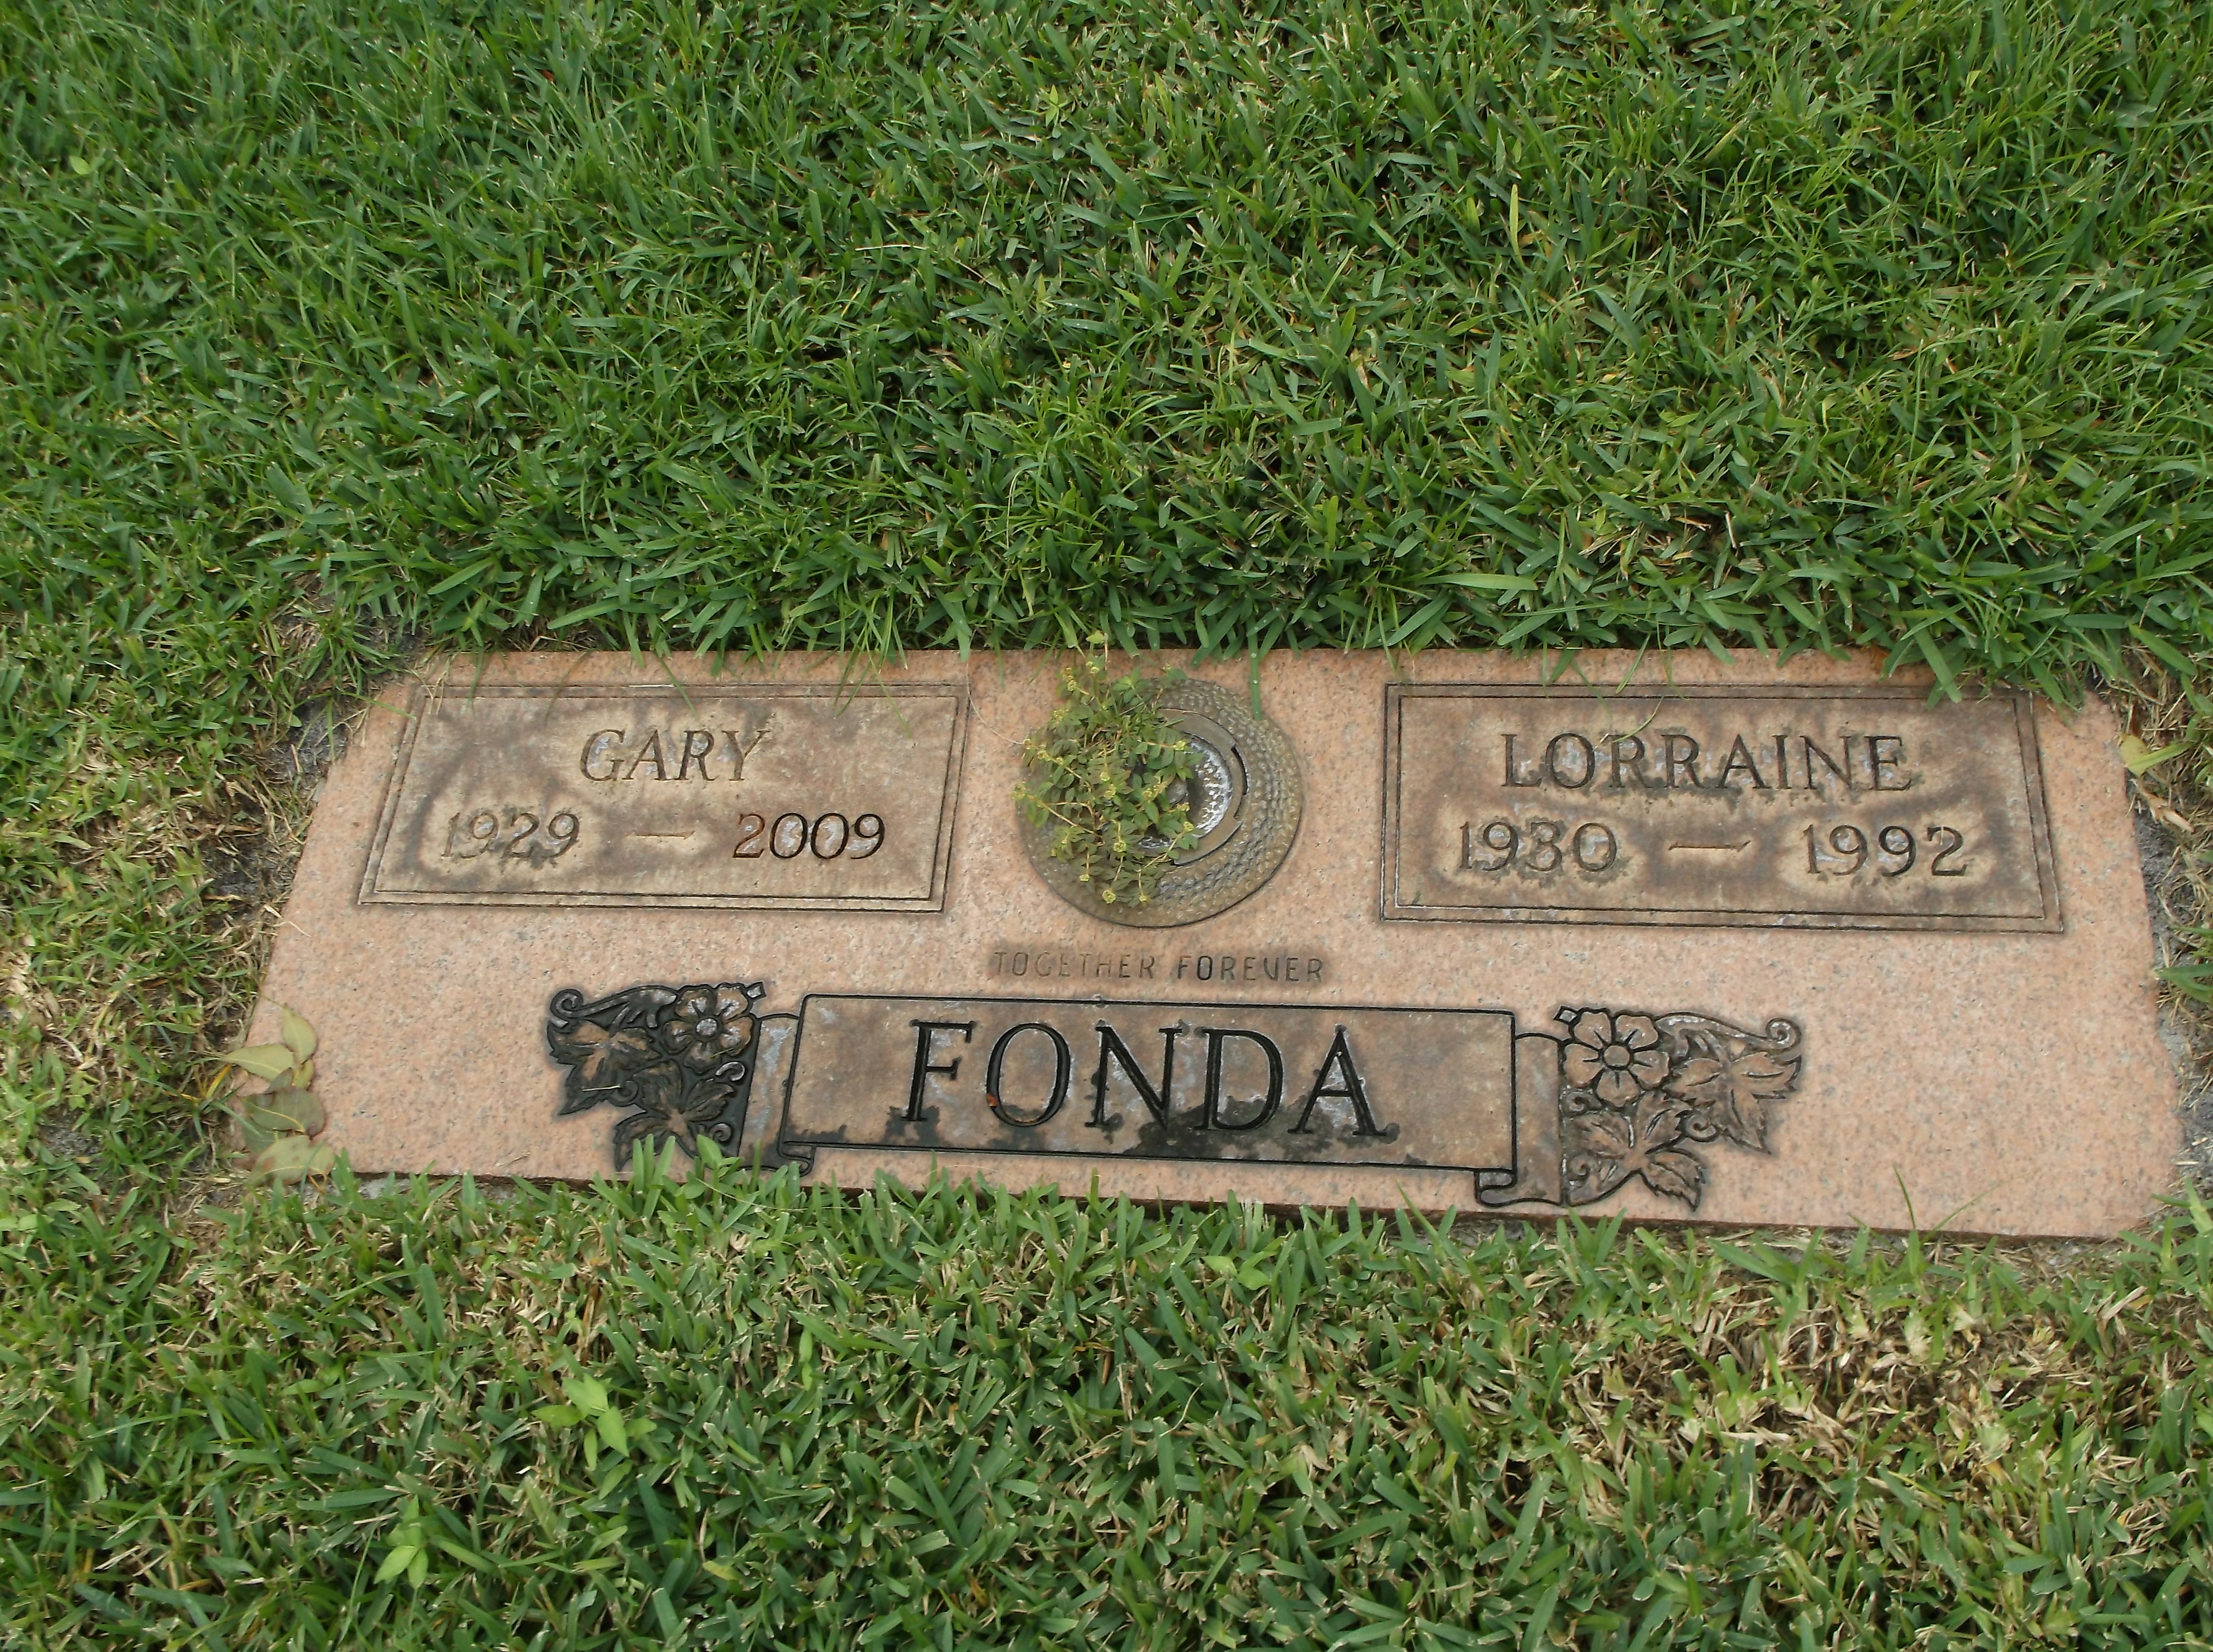 Lorraine Fonda